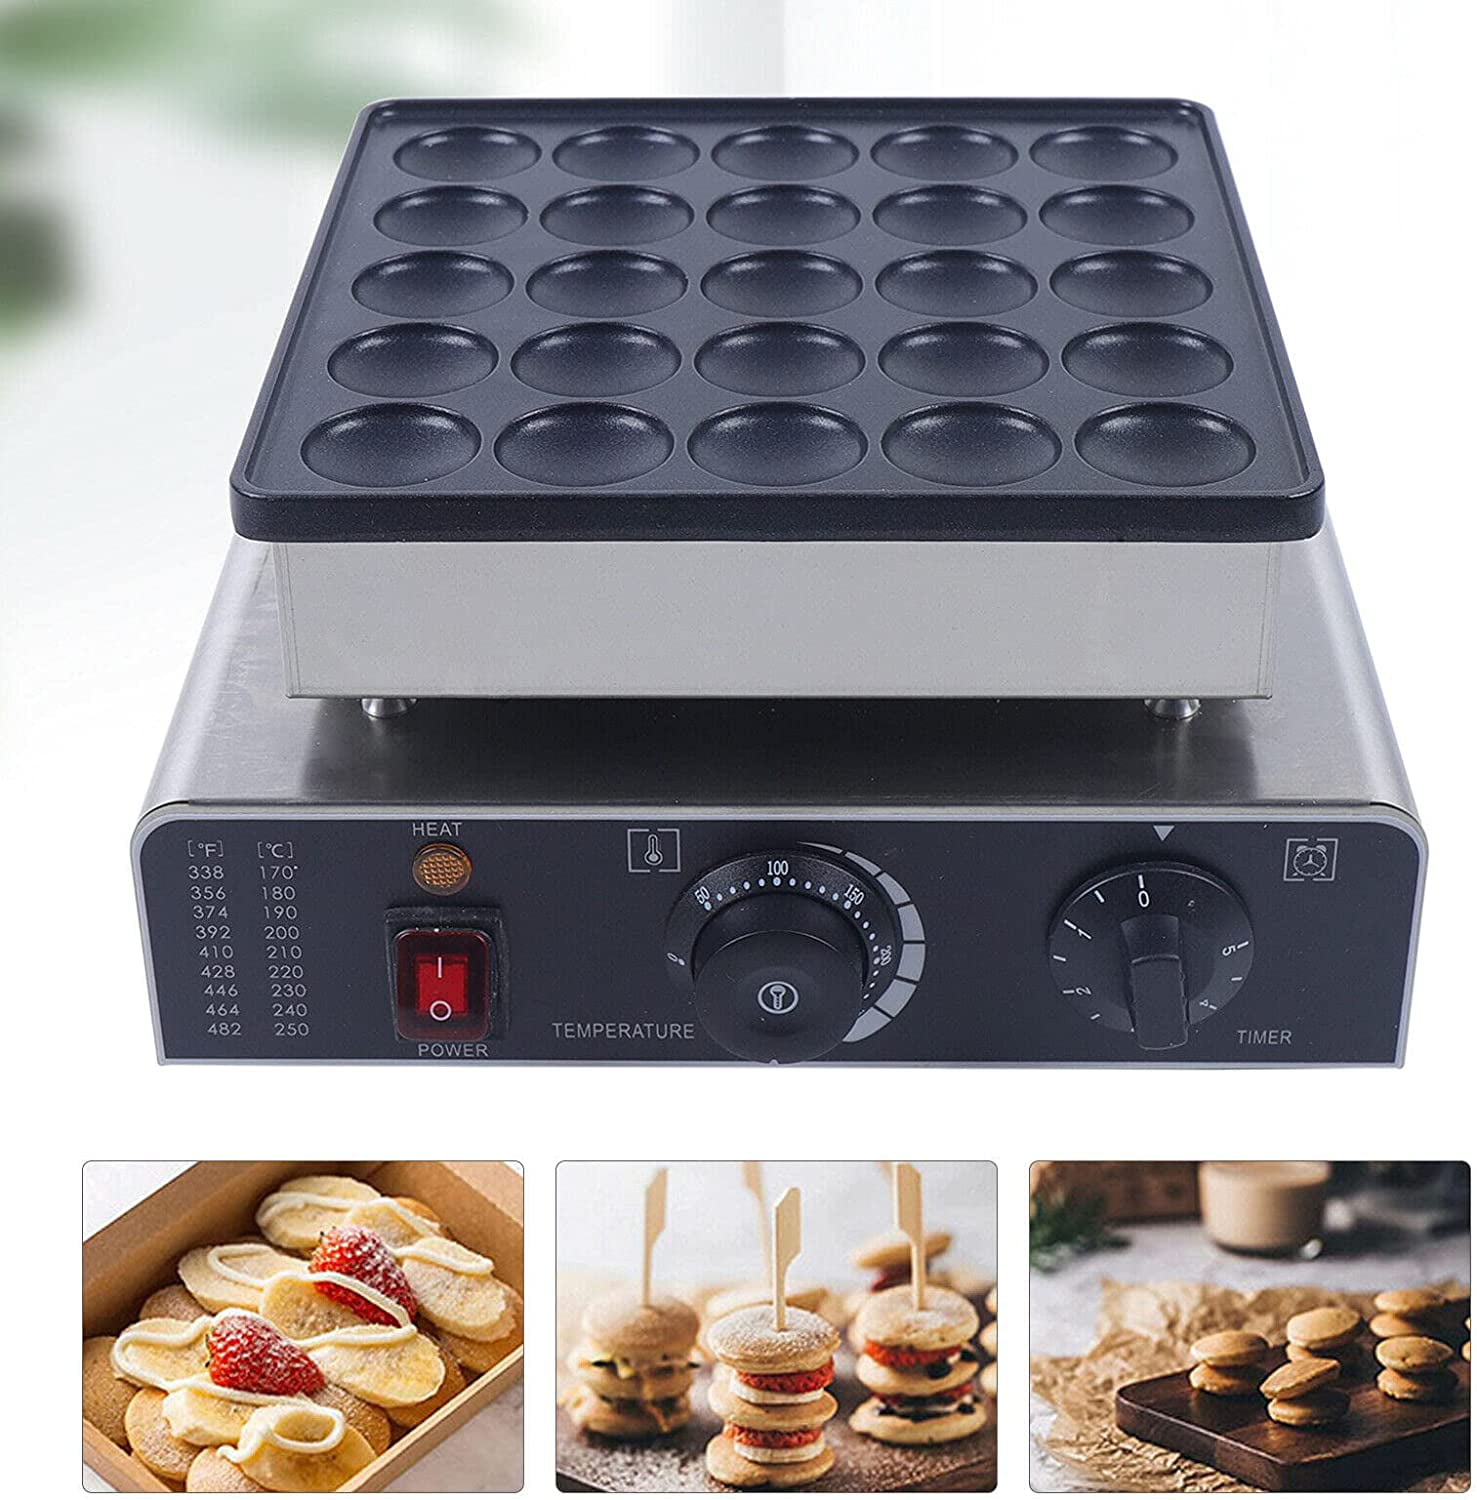 MATHOWAL Mini Dutch Pancakes Maker Machine, 25Pcs 850W Commercial Electric  Waffle Machine Non-stick Dorayaki Maker 1.77 Diameter Mini Pancakes Maker